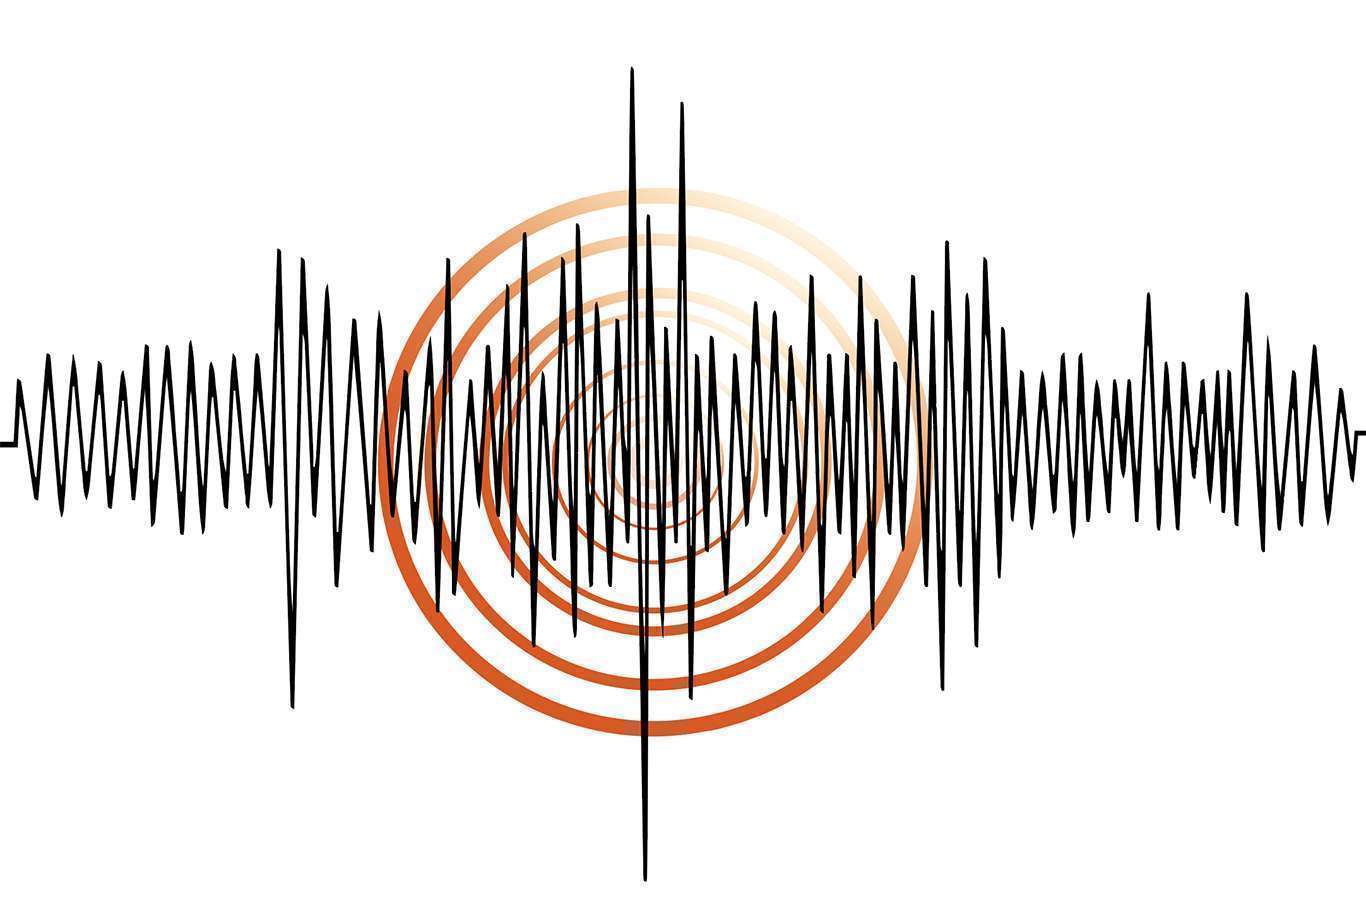 A 4.0 magnitude earthquake jolts eastern Turkey